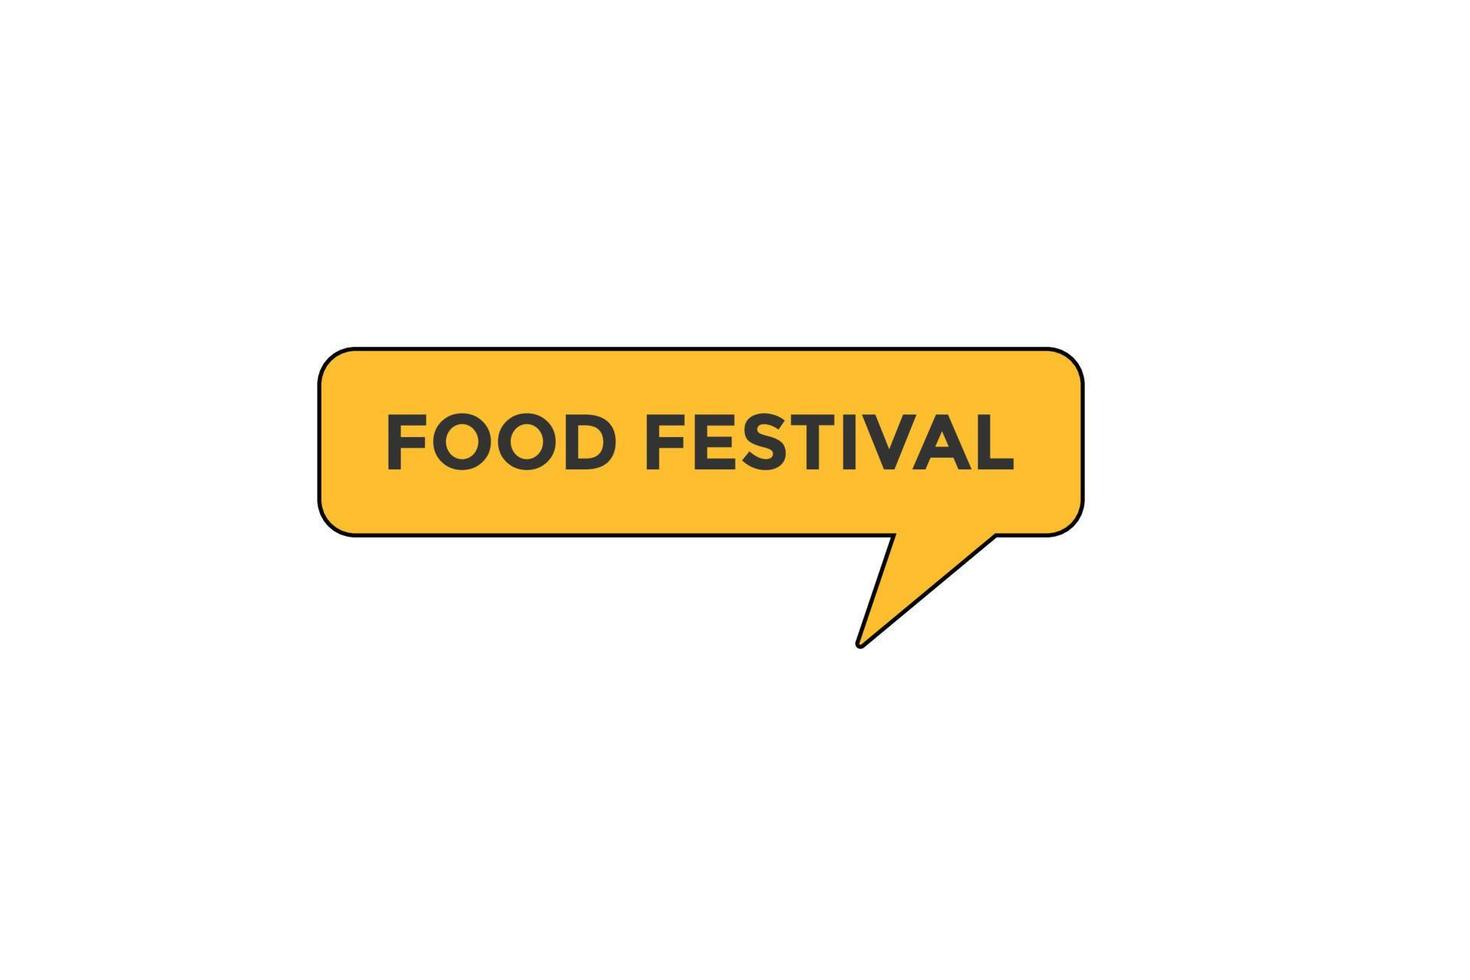 comida festival vectores.signo etiqueta burbuja habla comida festival vector